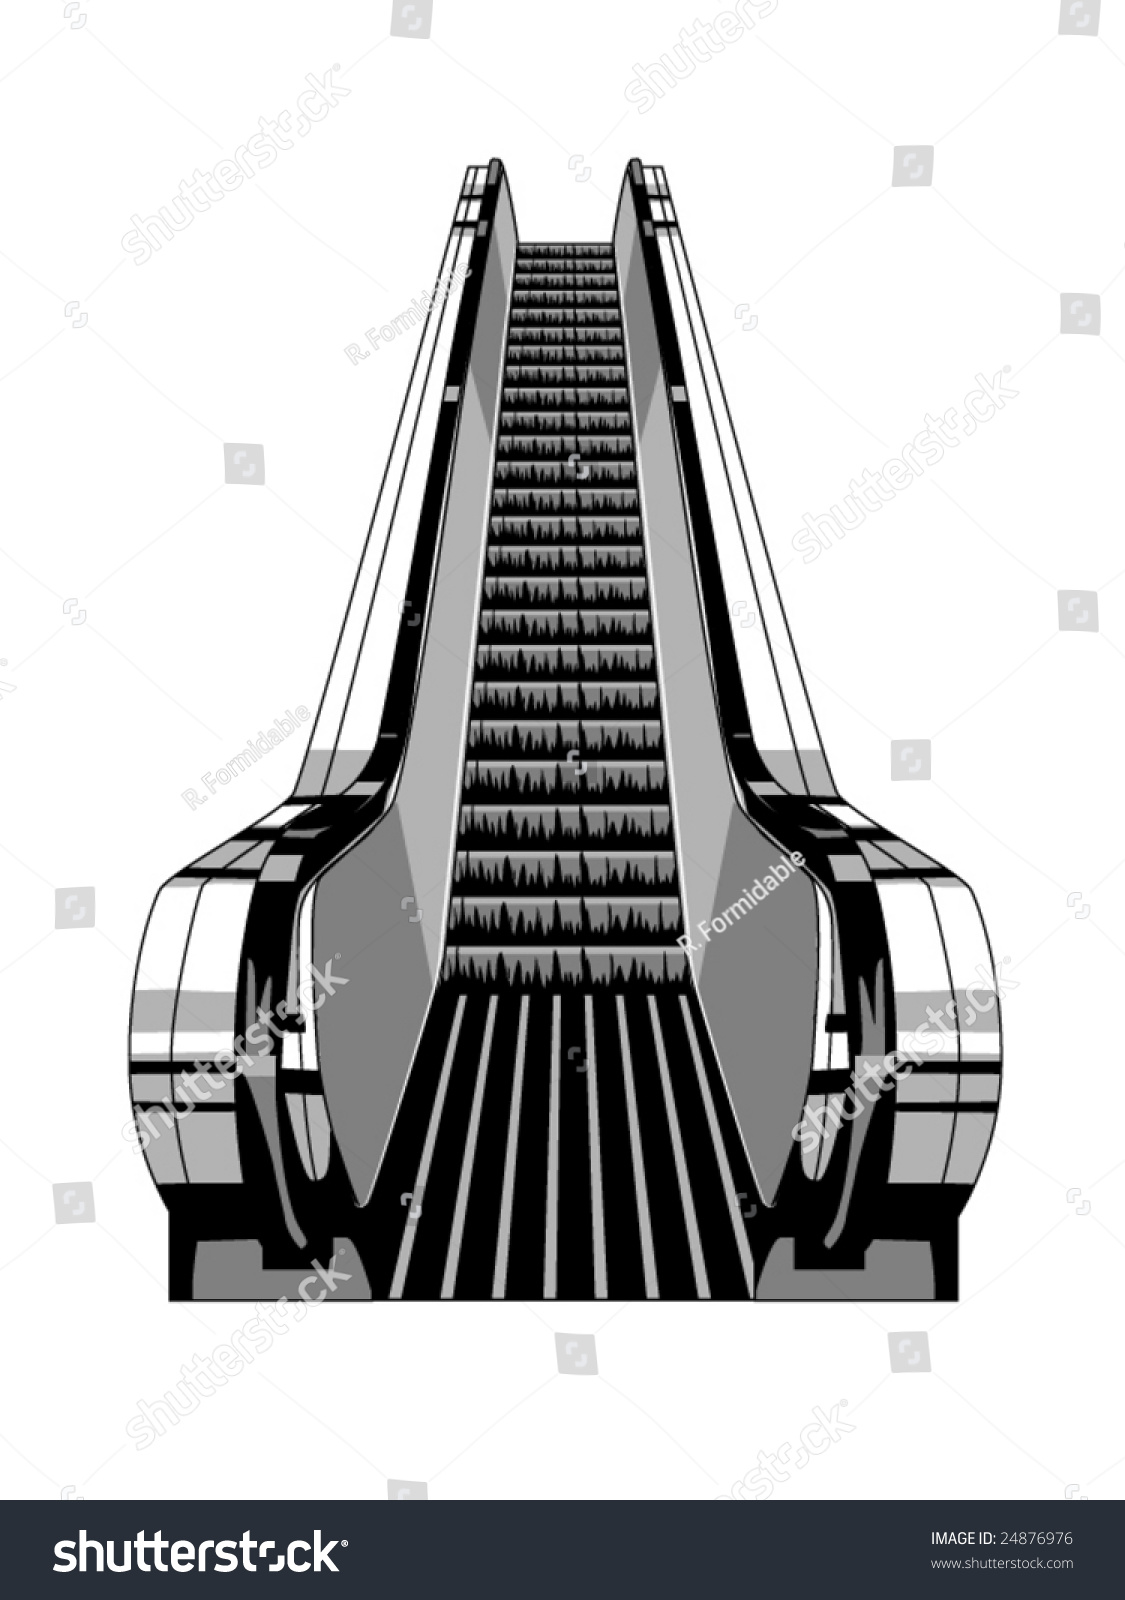 escalator clip art free - photo #19